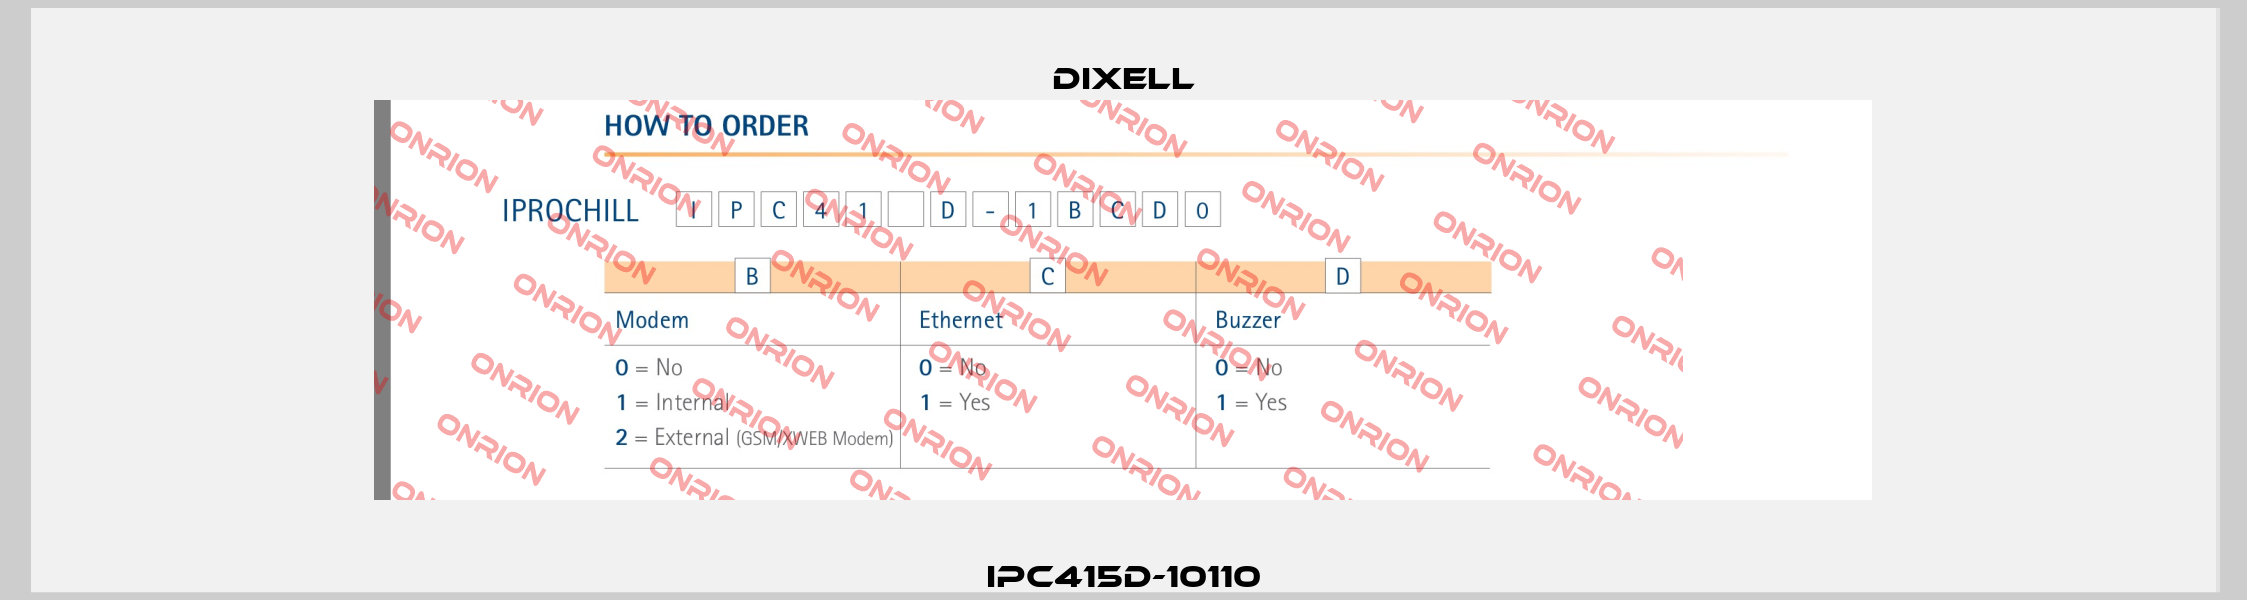 IPC415D-10110 Dixell